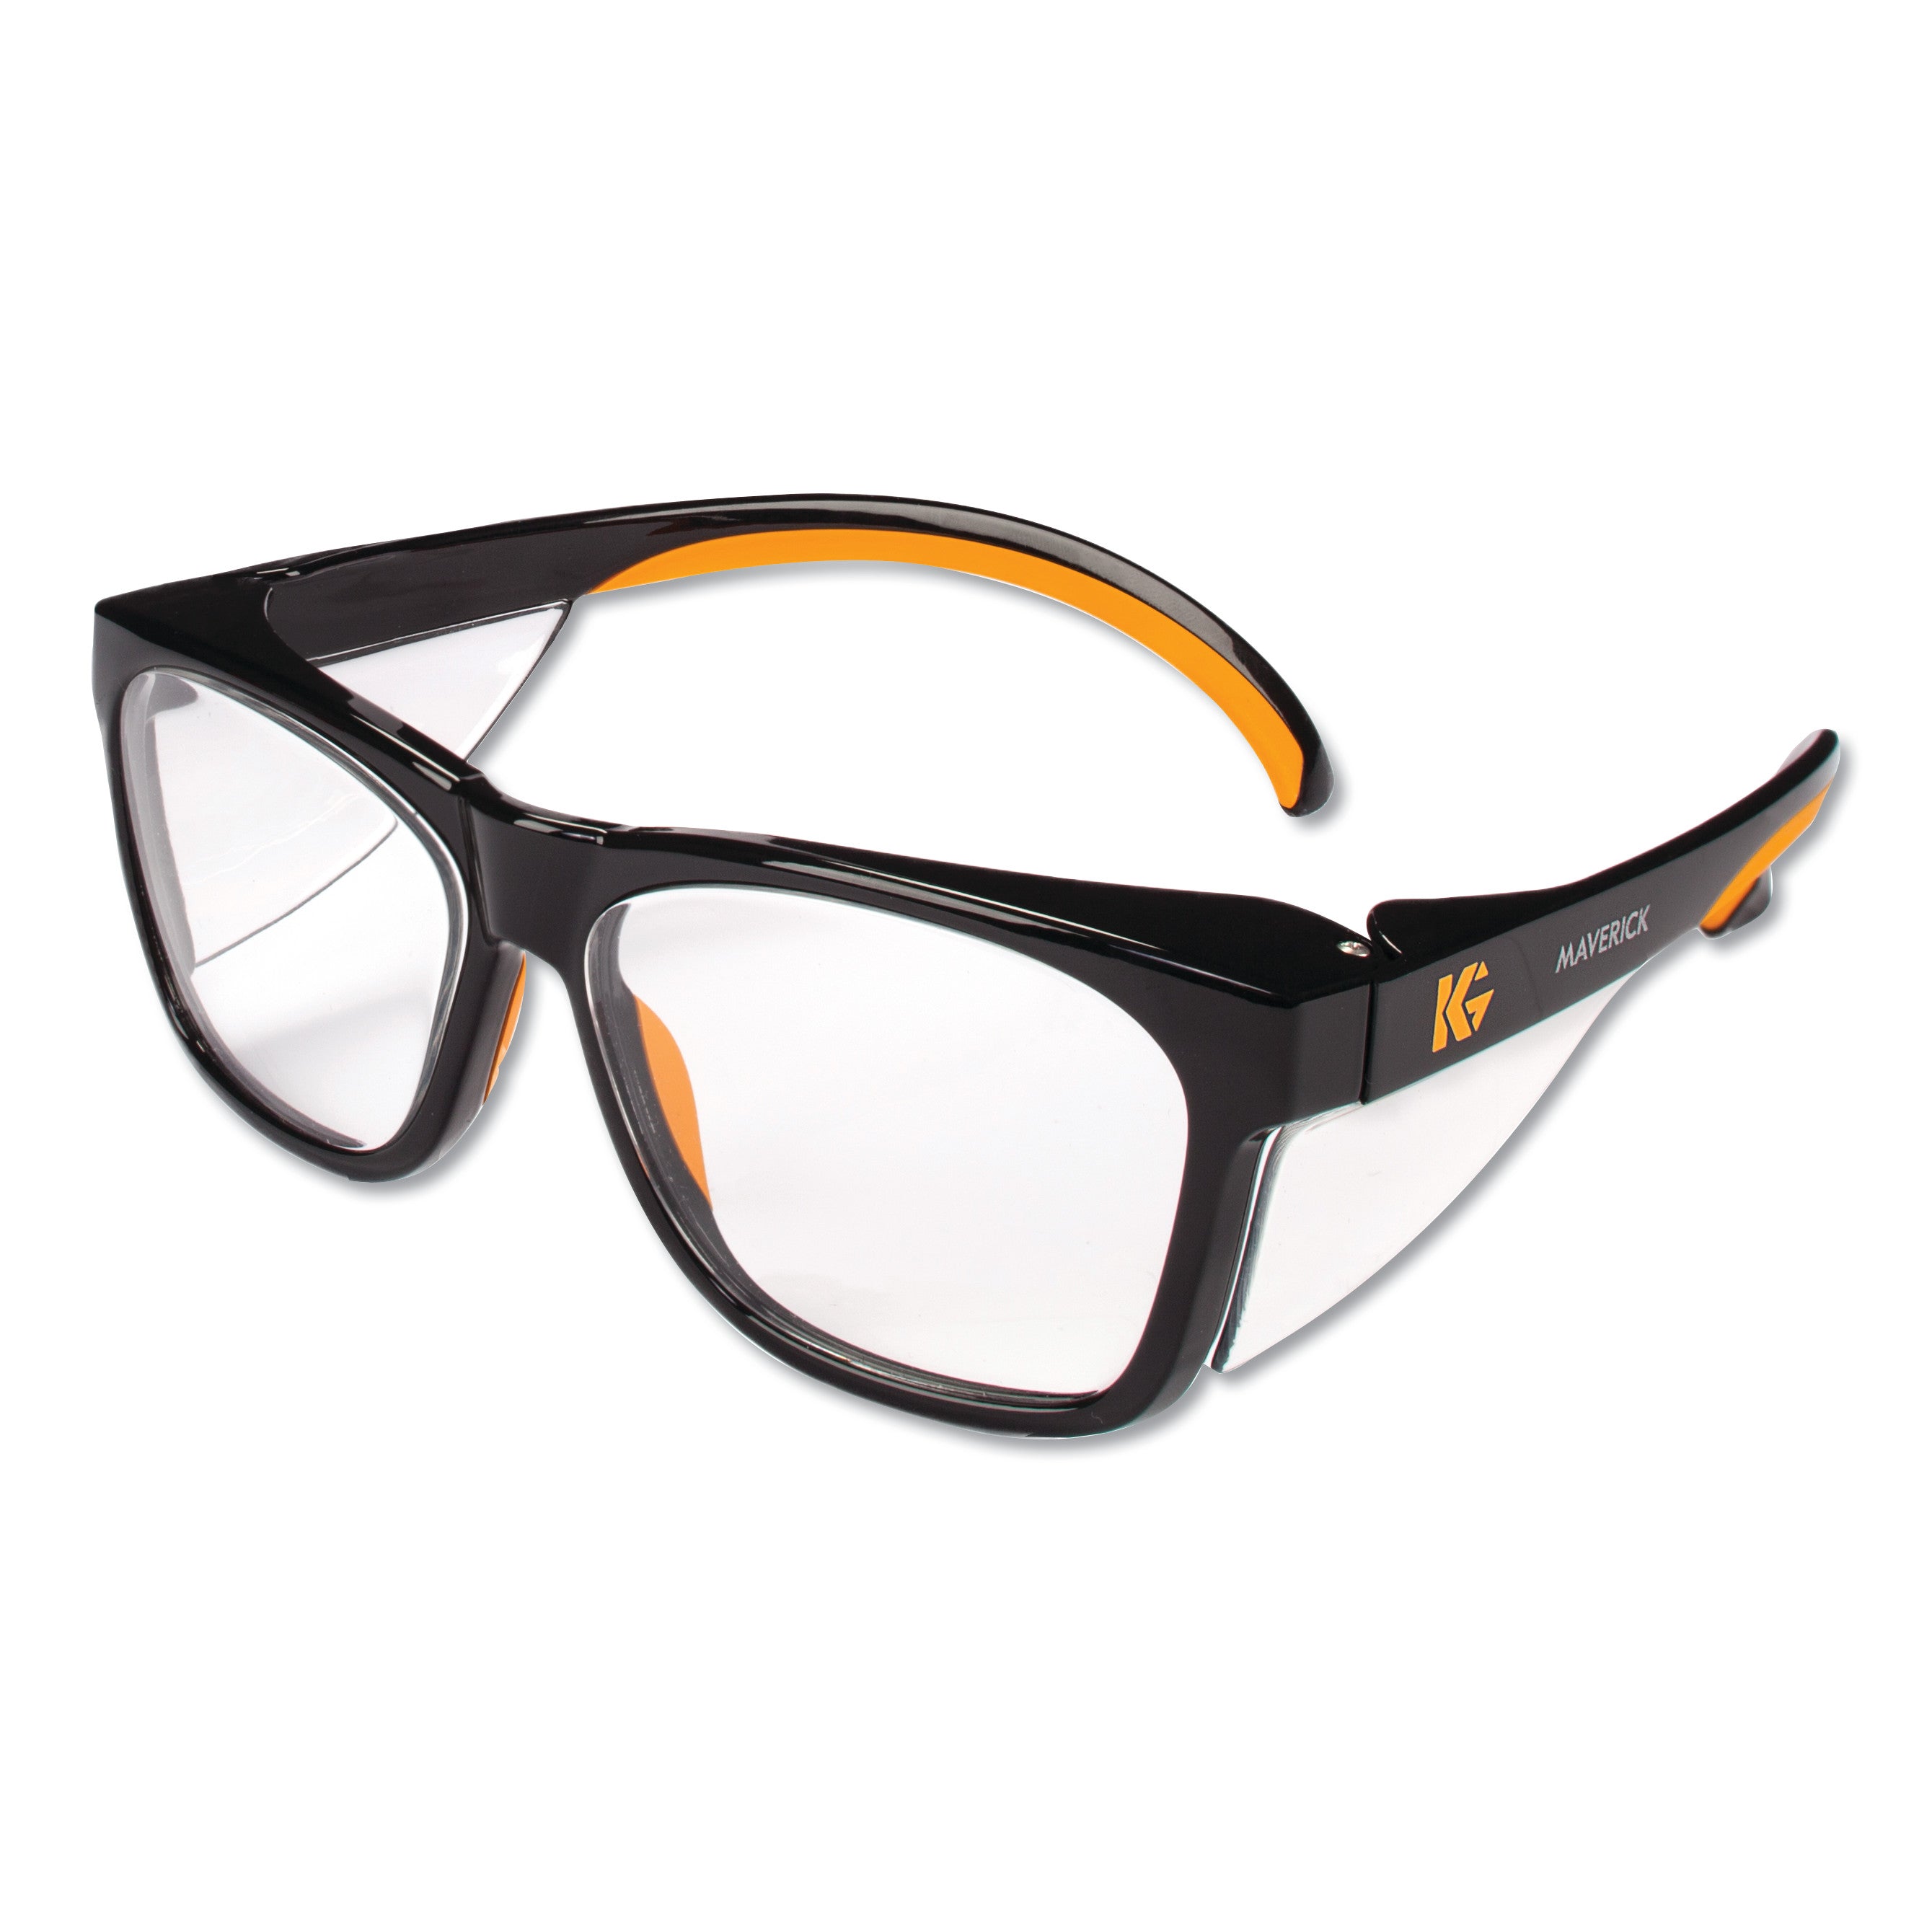 maverick-safety-glasses-black-orange-polycarbonate-frame-12-box_kcc49312 - 1